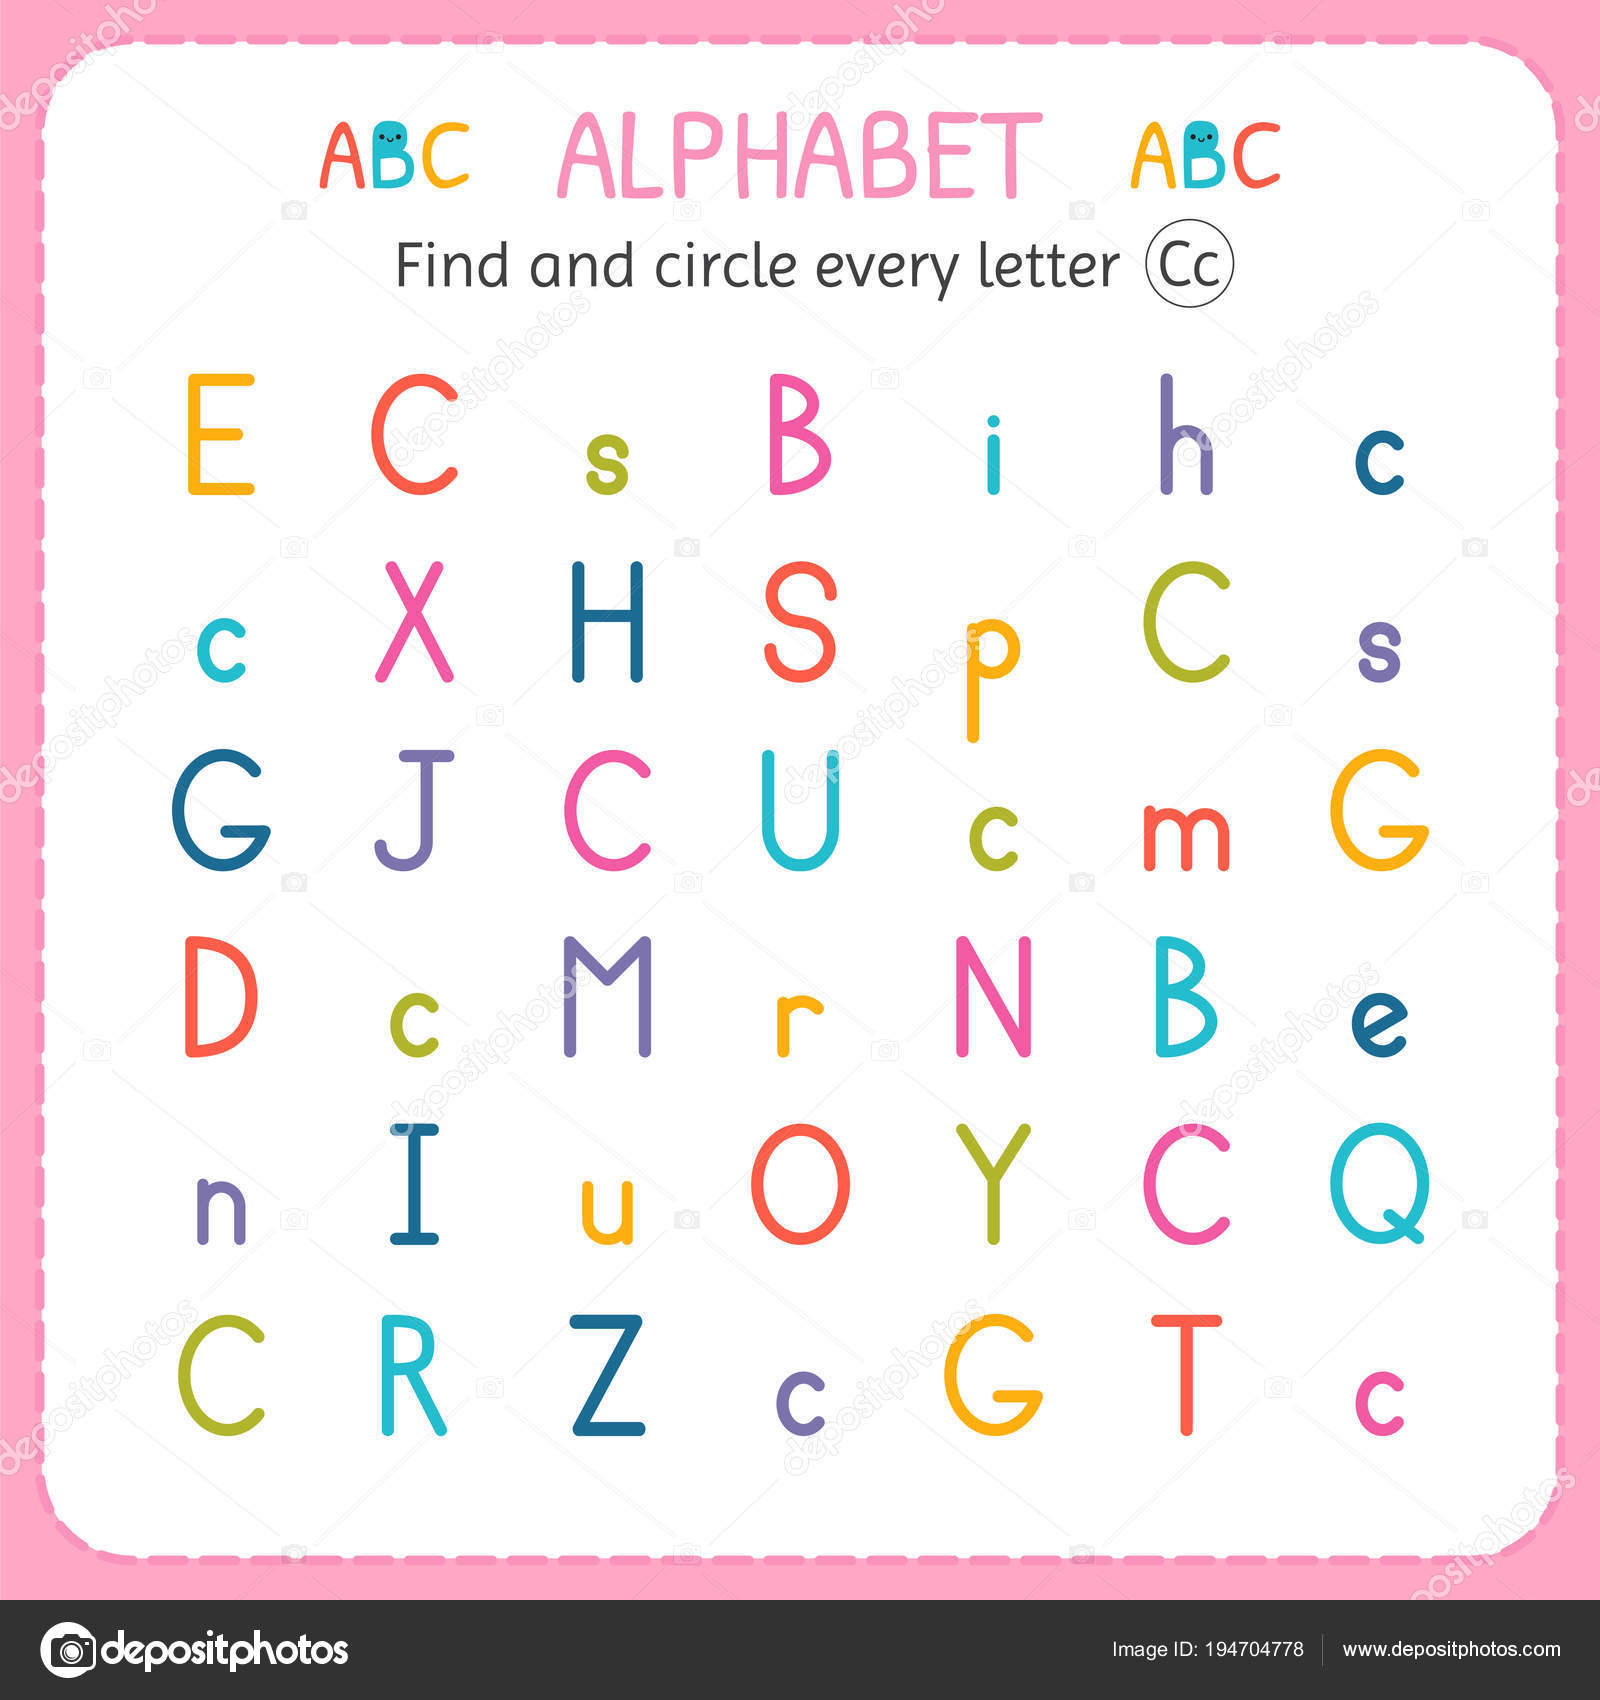 Letter C Worksheet Preschool | Find And Circle Every Letter within Letter C Worksheets For Toddlers